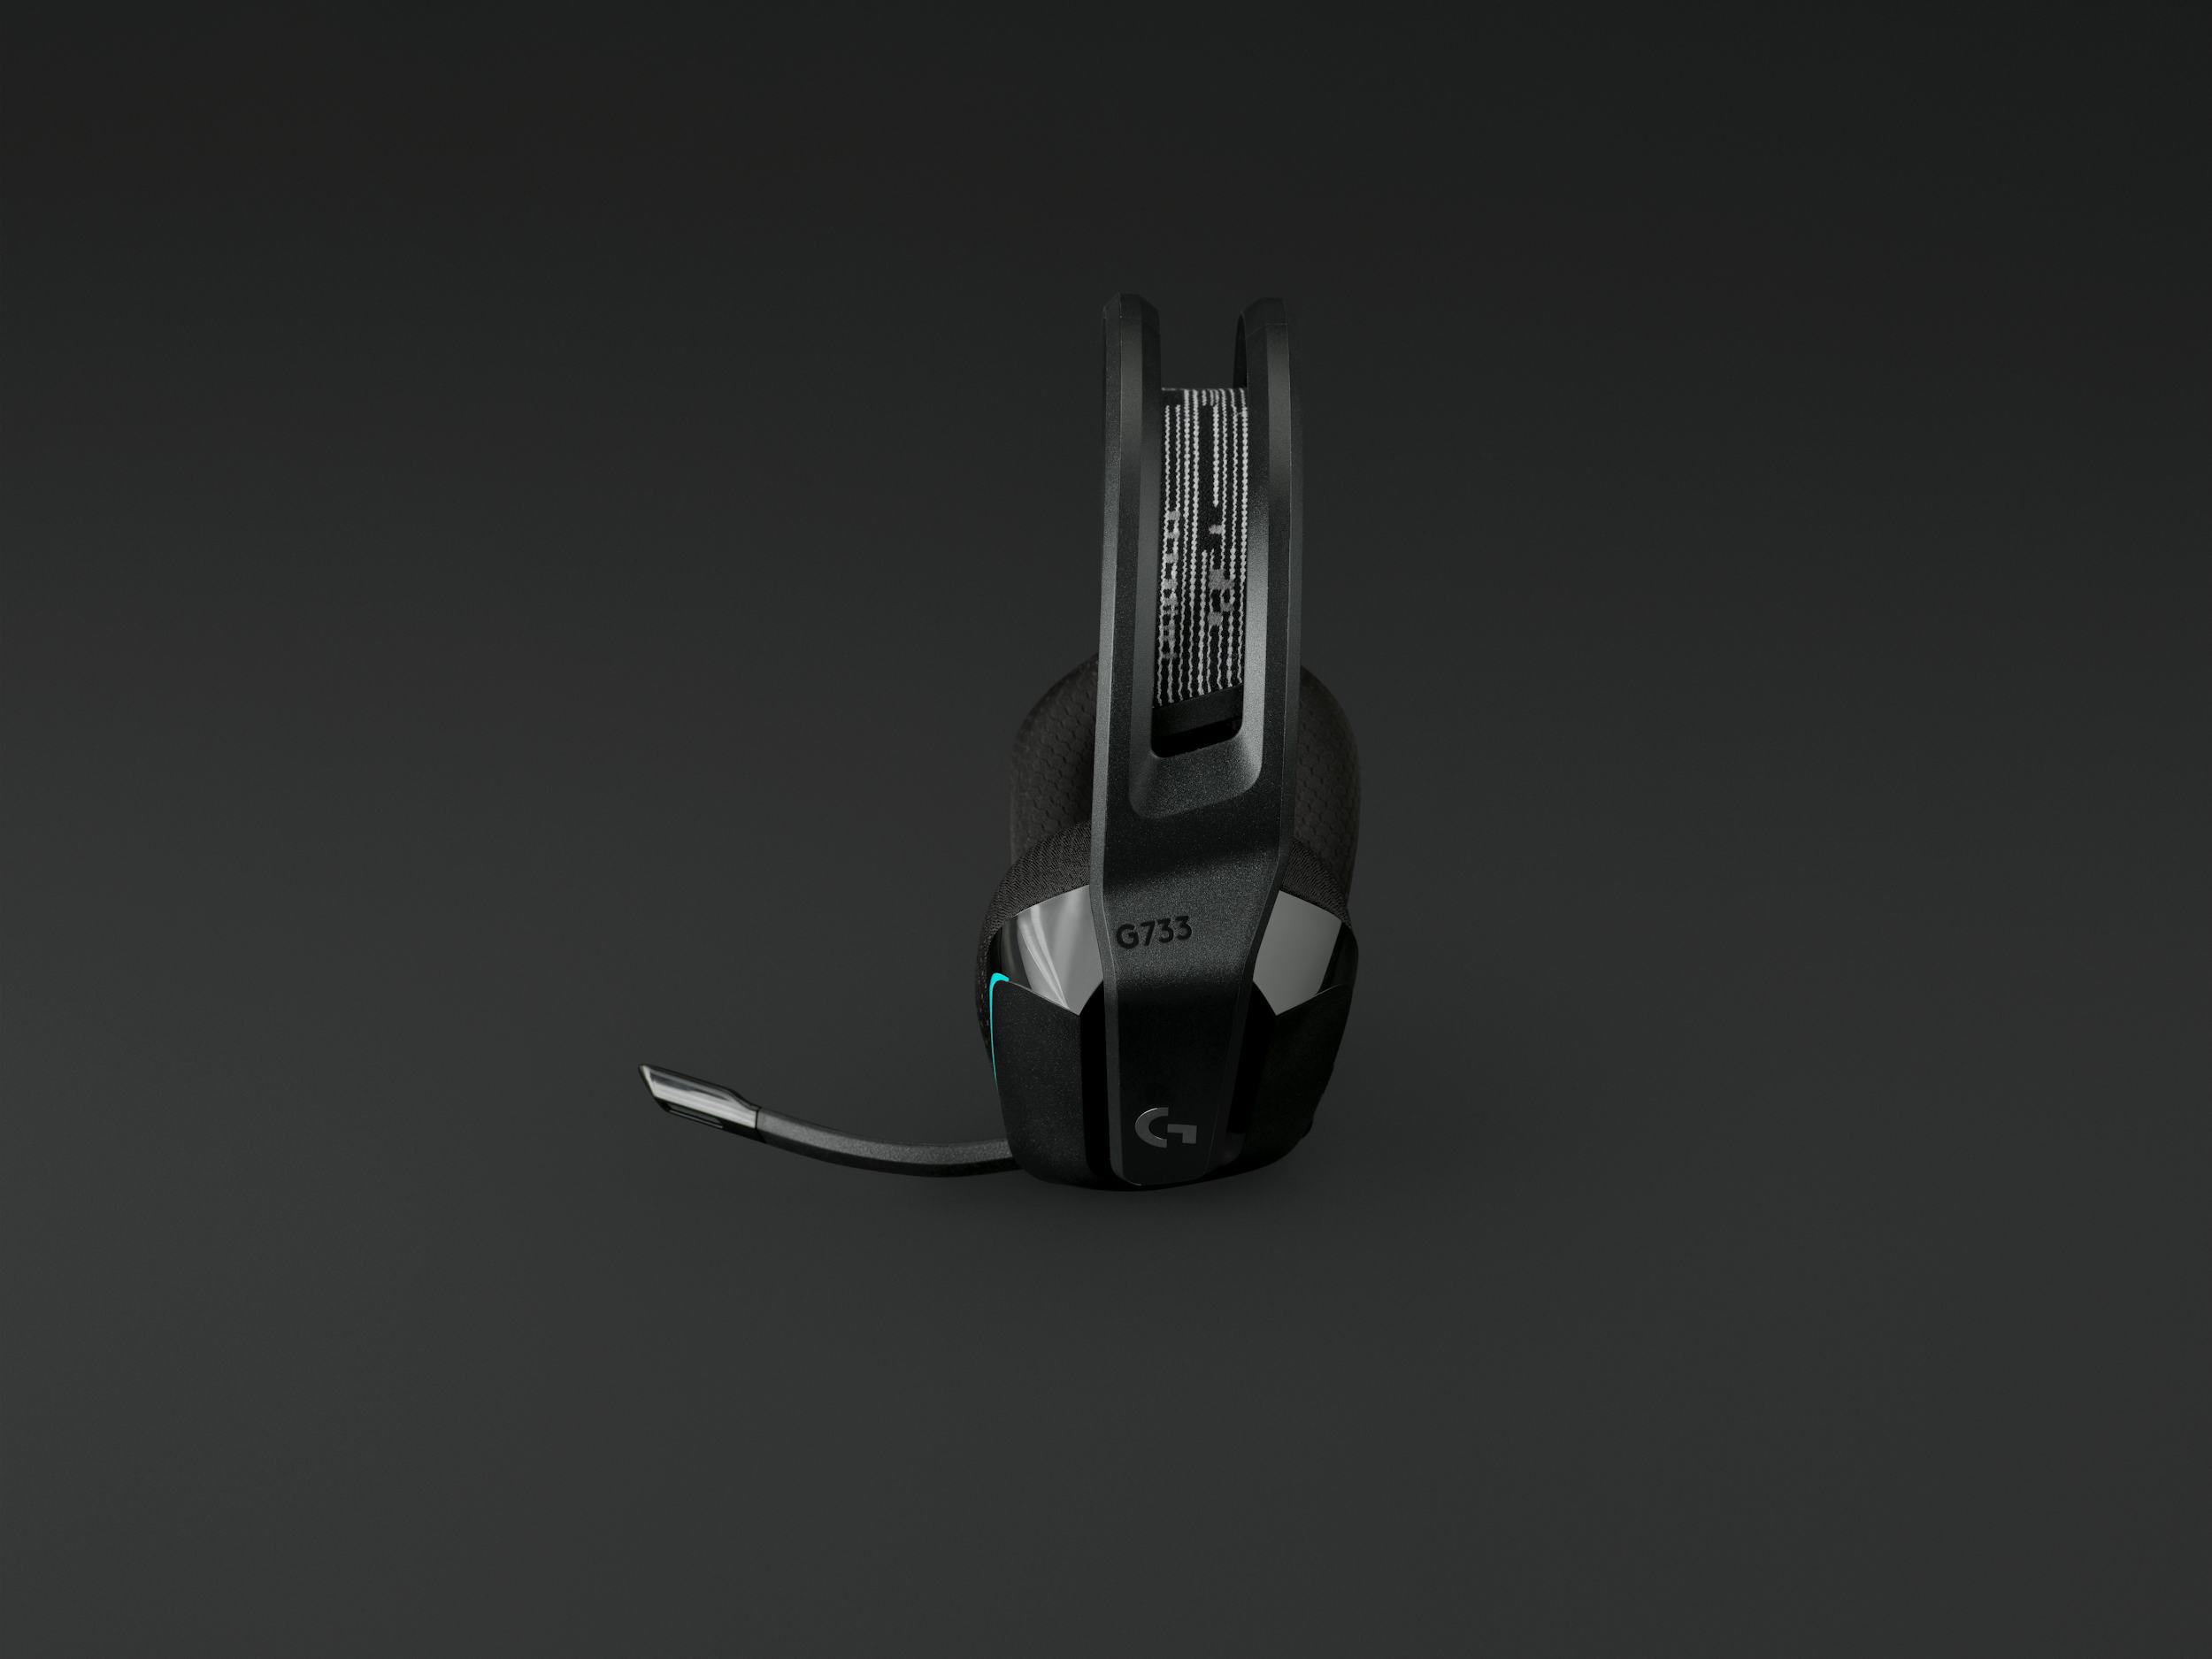 Logitech G733 Lightspeed RGB Wireless Gaming Headset - White / Black